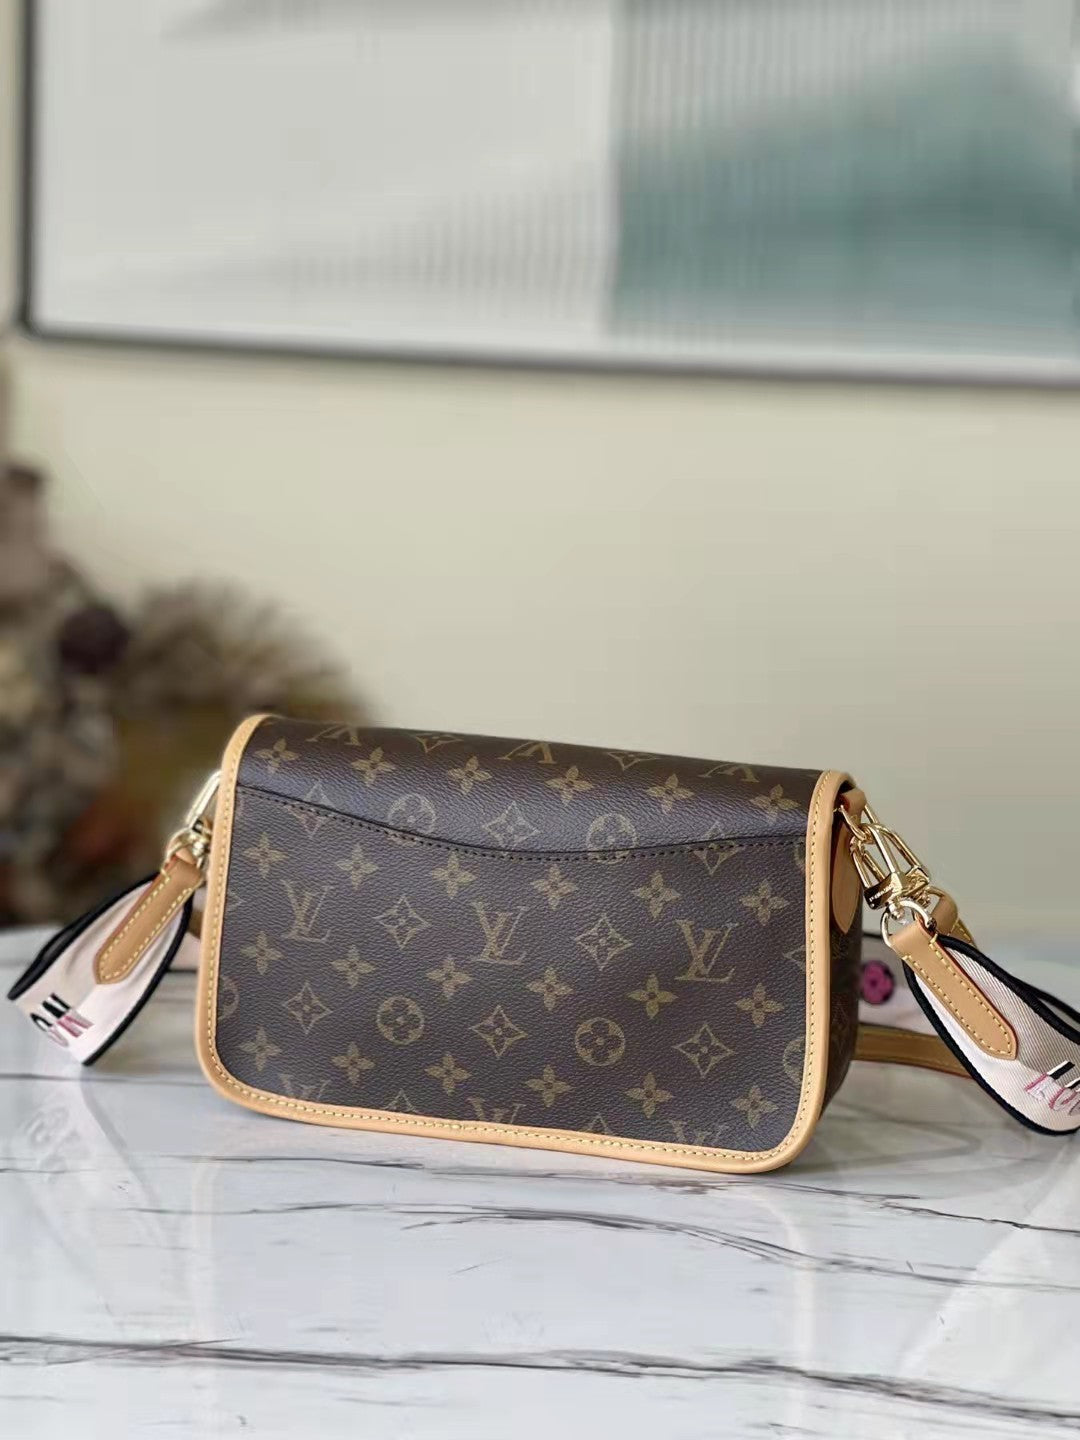 Louis Vuitton Diane Handbag - 4 For Sale on 1stDibs